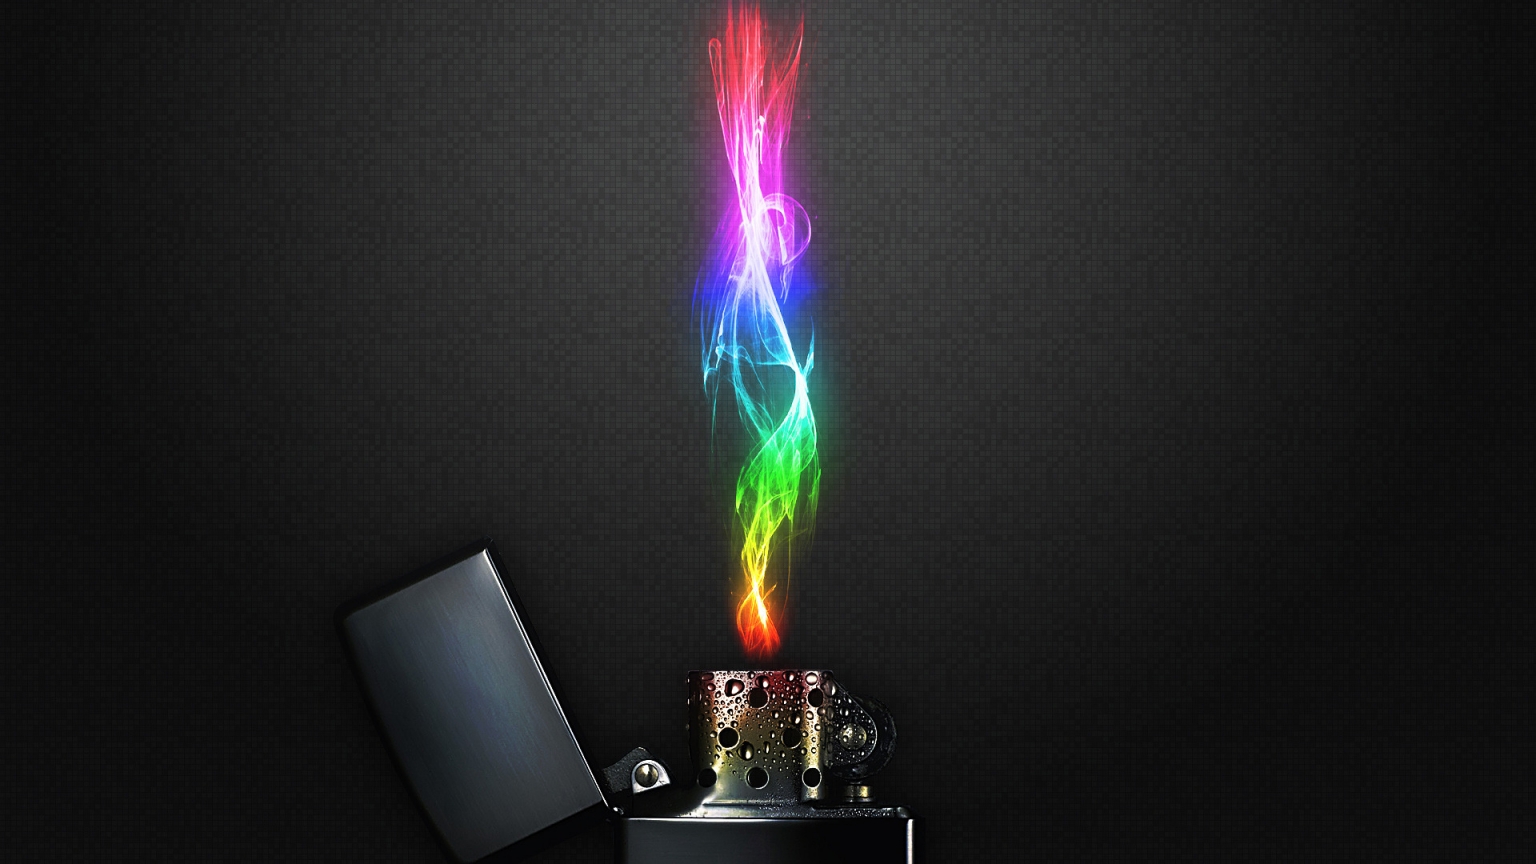 Rainbow Lighter for 1536 x 864 HDTV resolution